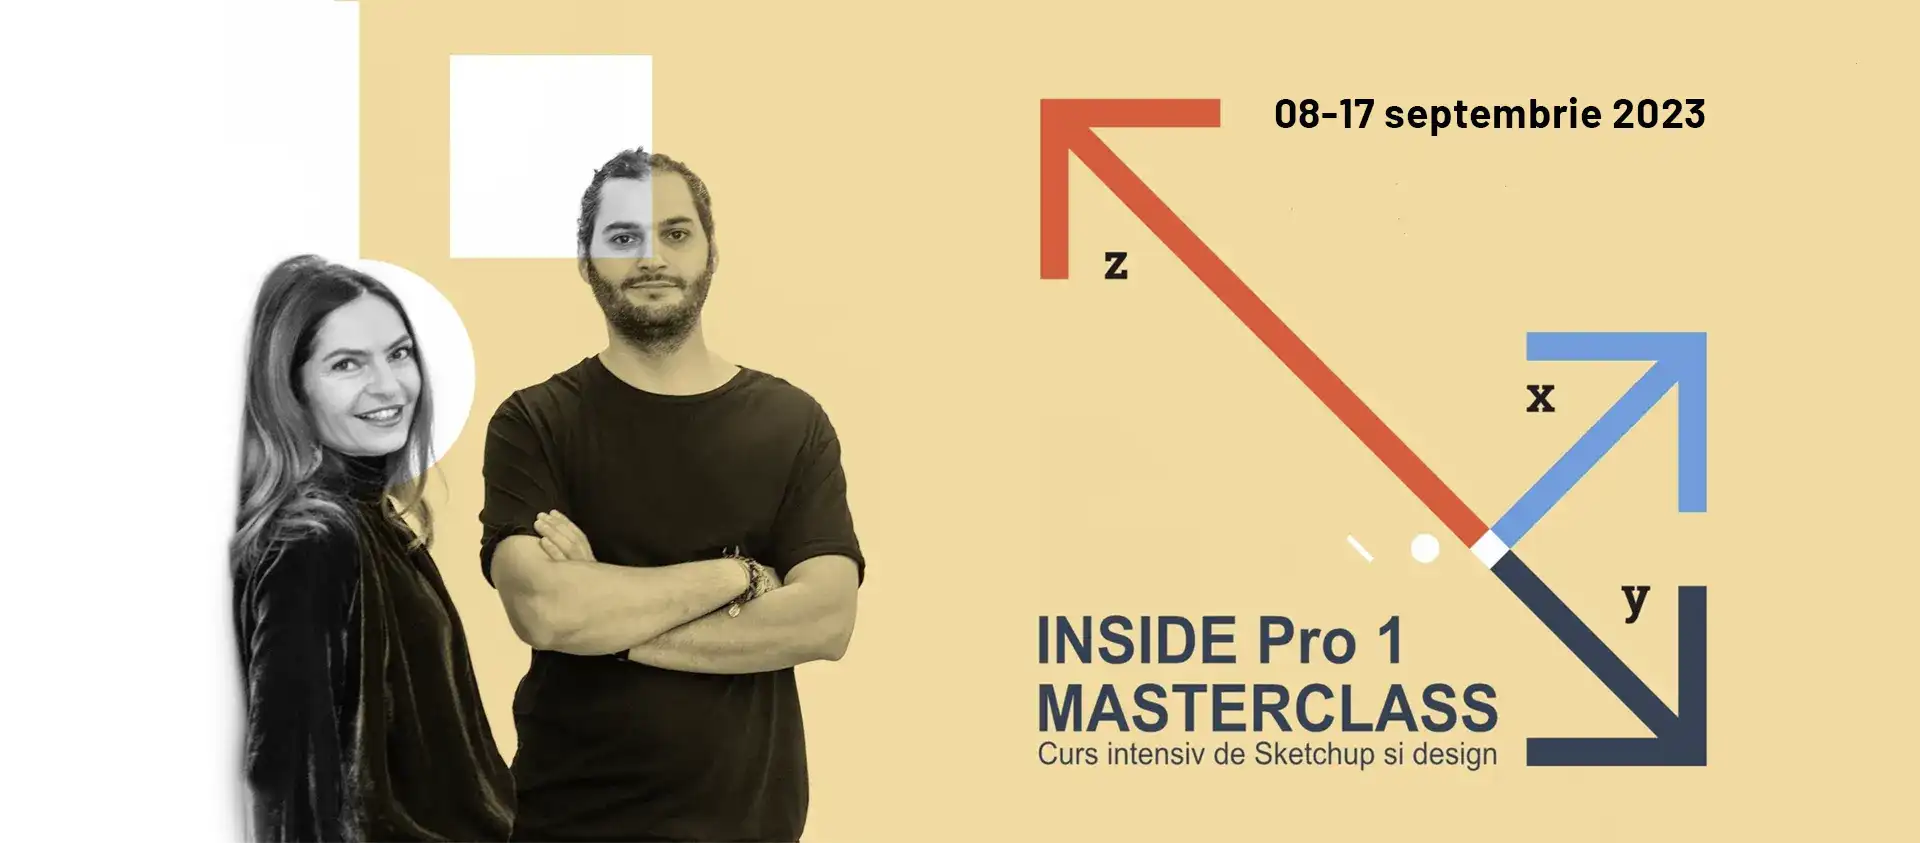 Inside Pro 1 Masterclass